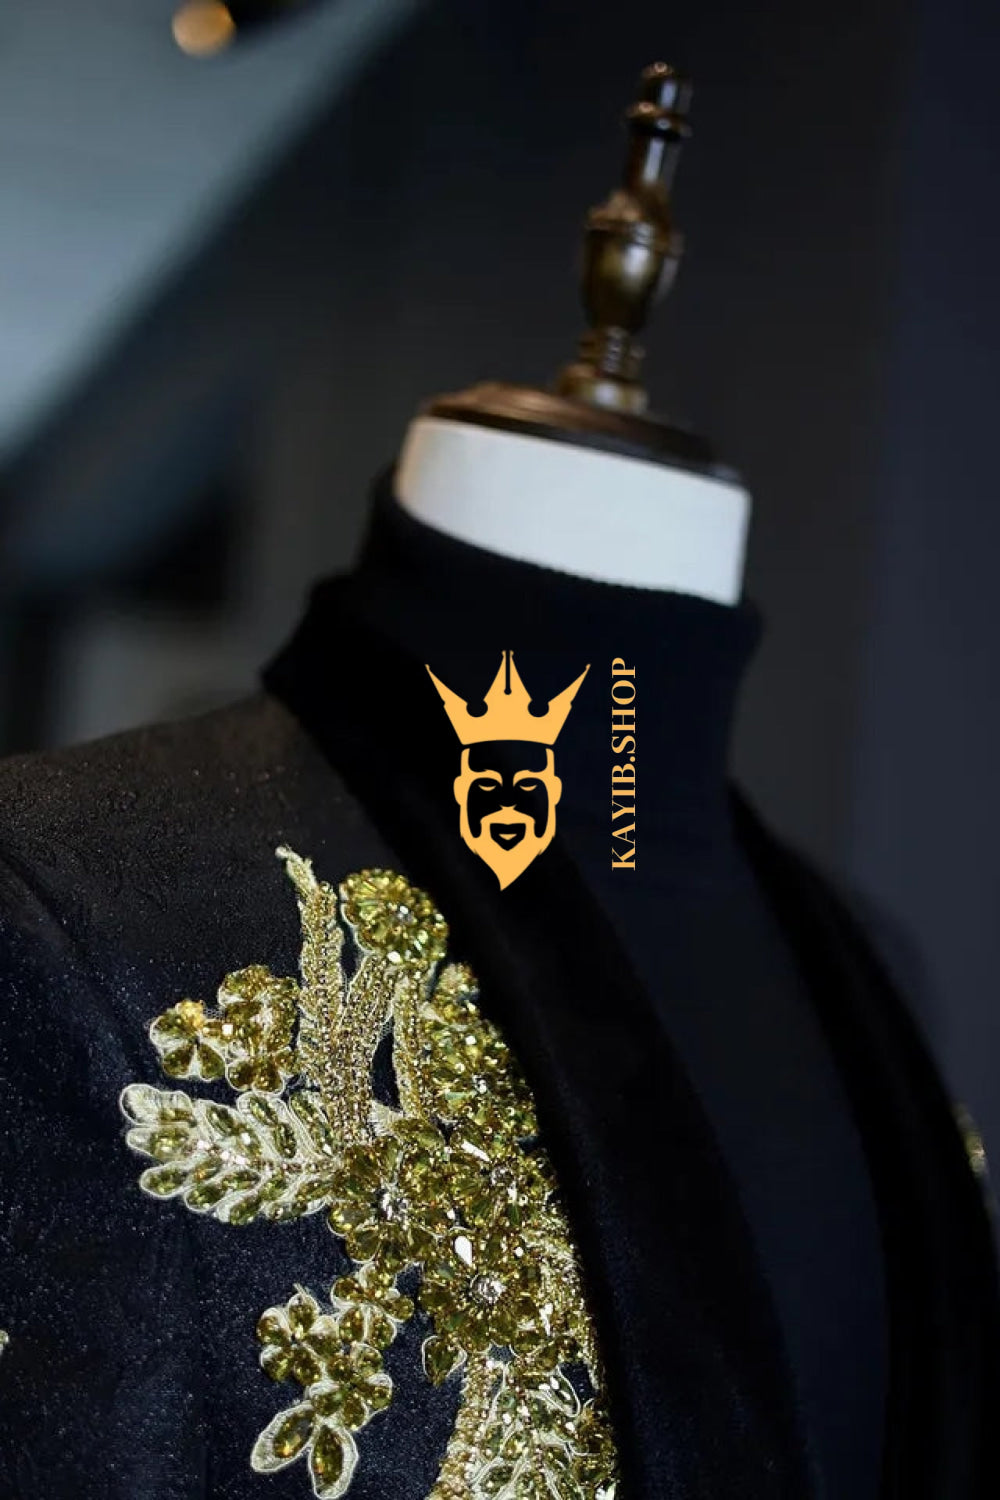 Luxurious Custom Men's Suit: Sheer Velvet Lapel 2-Piece Set with Appliques, Beads, Diamonds | Tailored Plus Size Options Available - kayibstrore